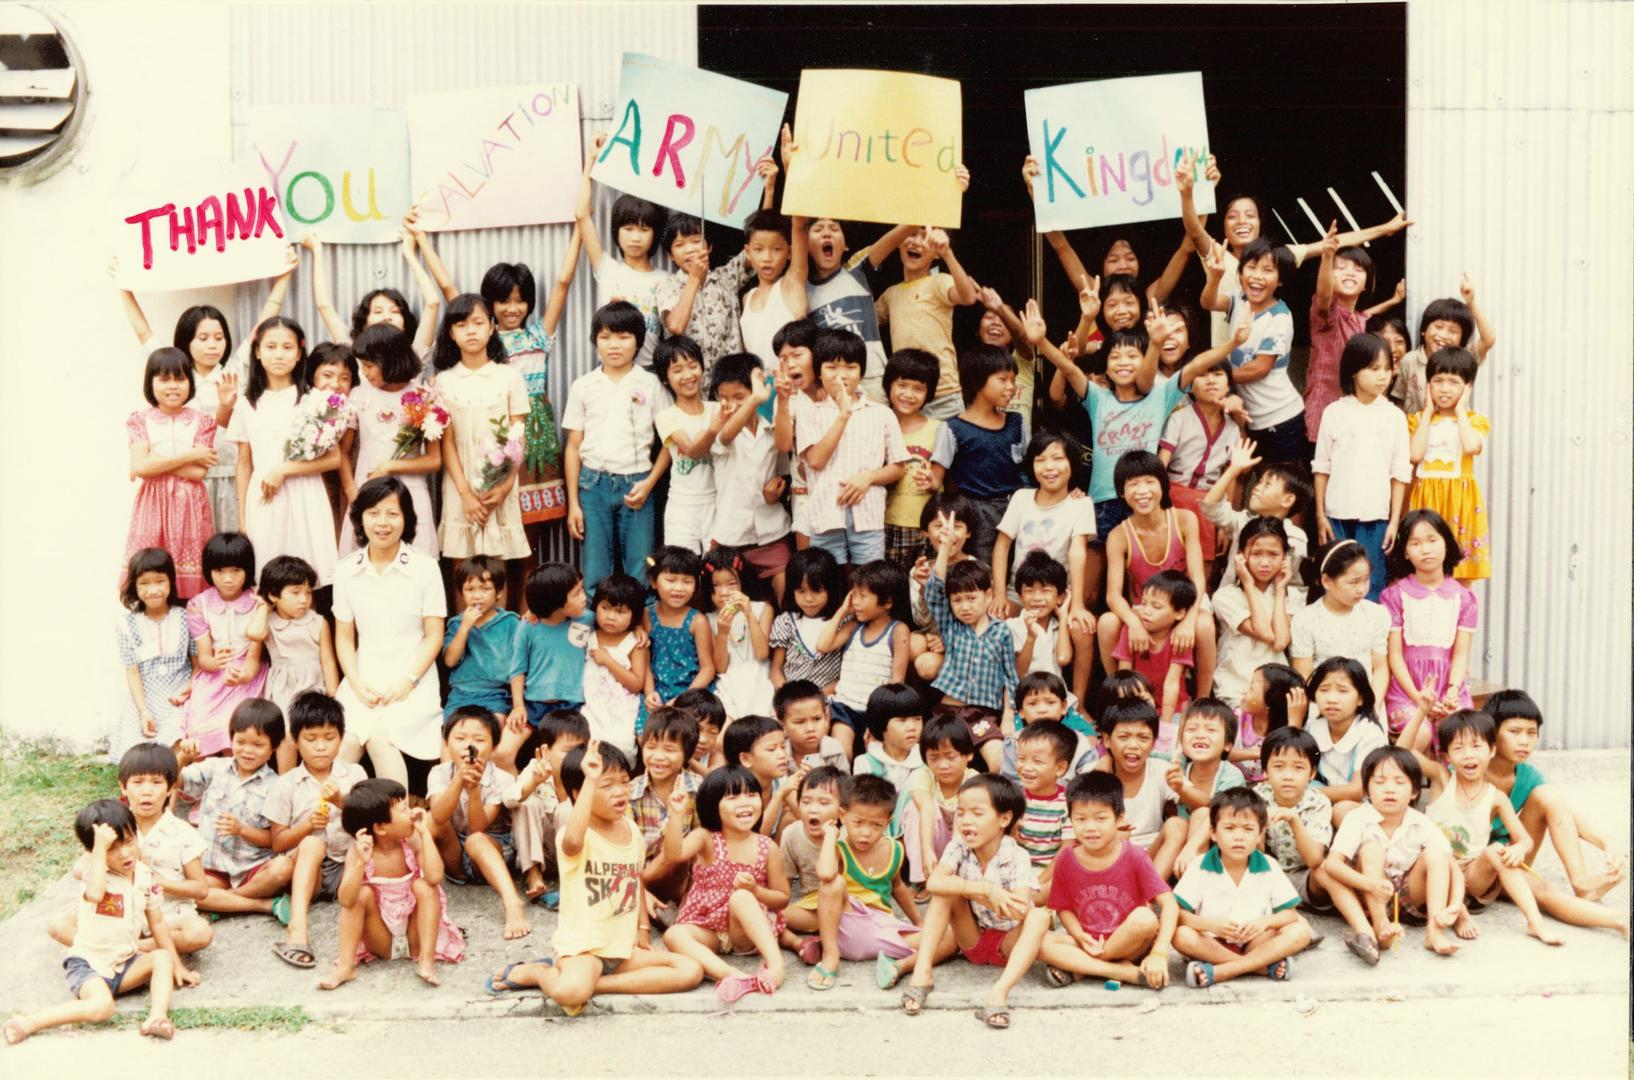 Vietnamese refugee camp thank you message